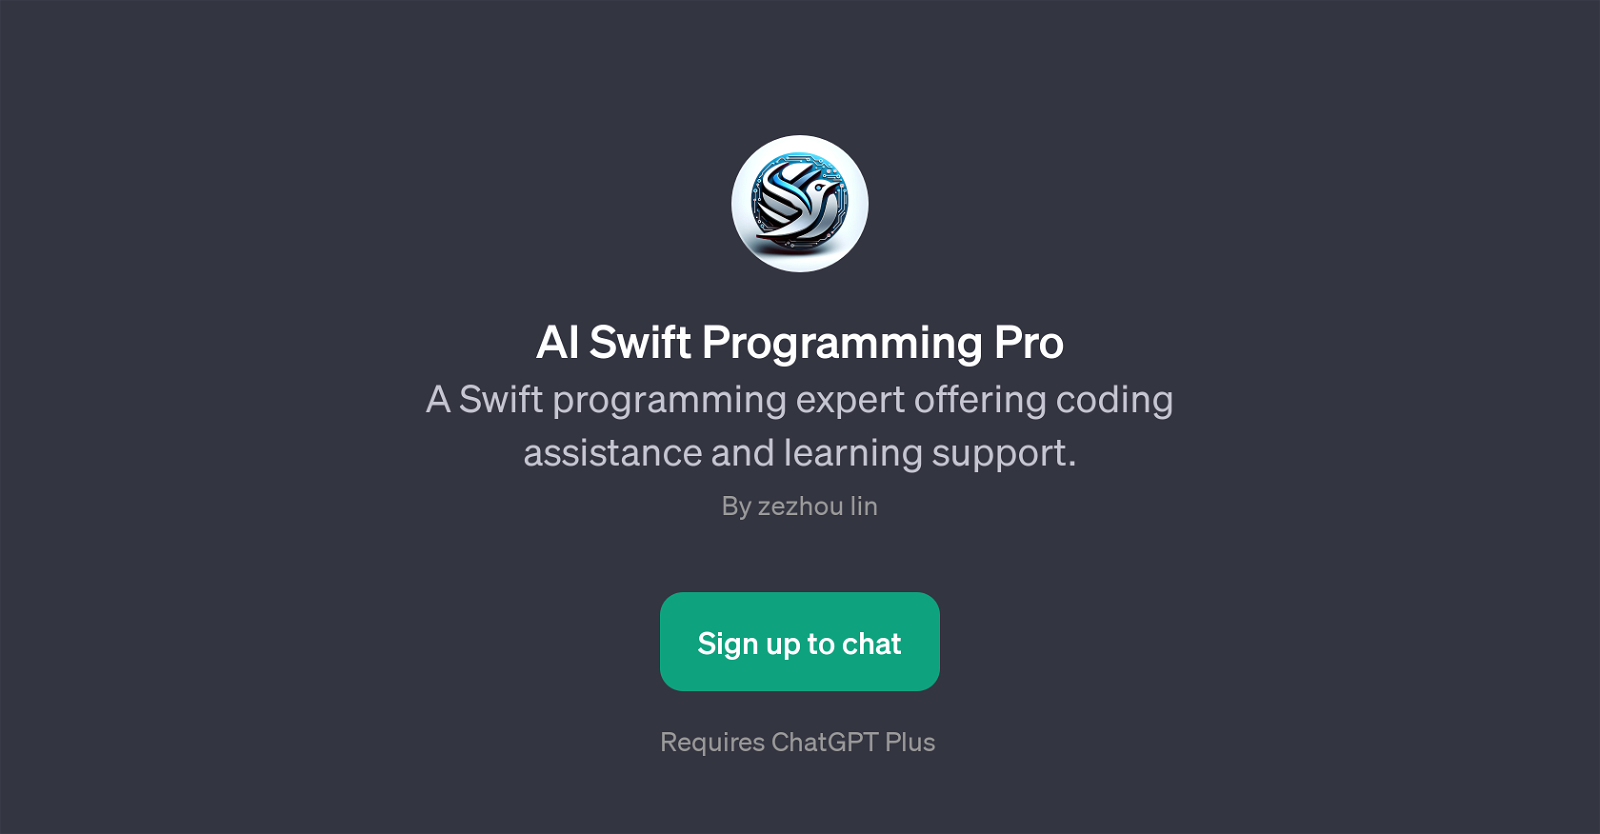 AI Swift Programming Pro website